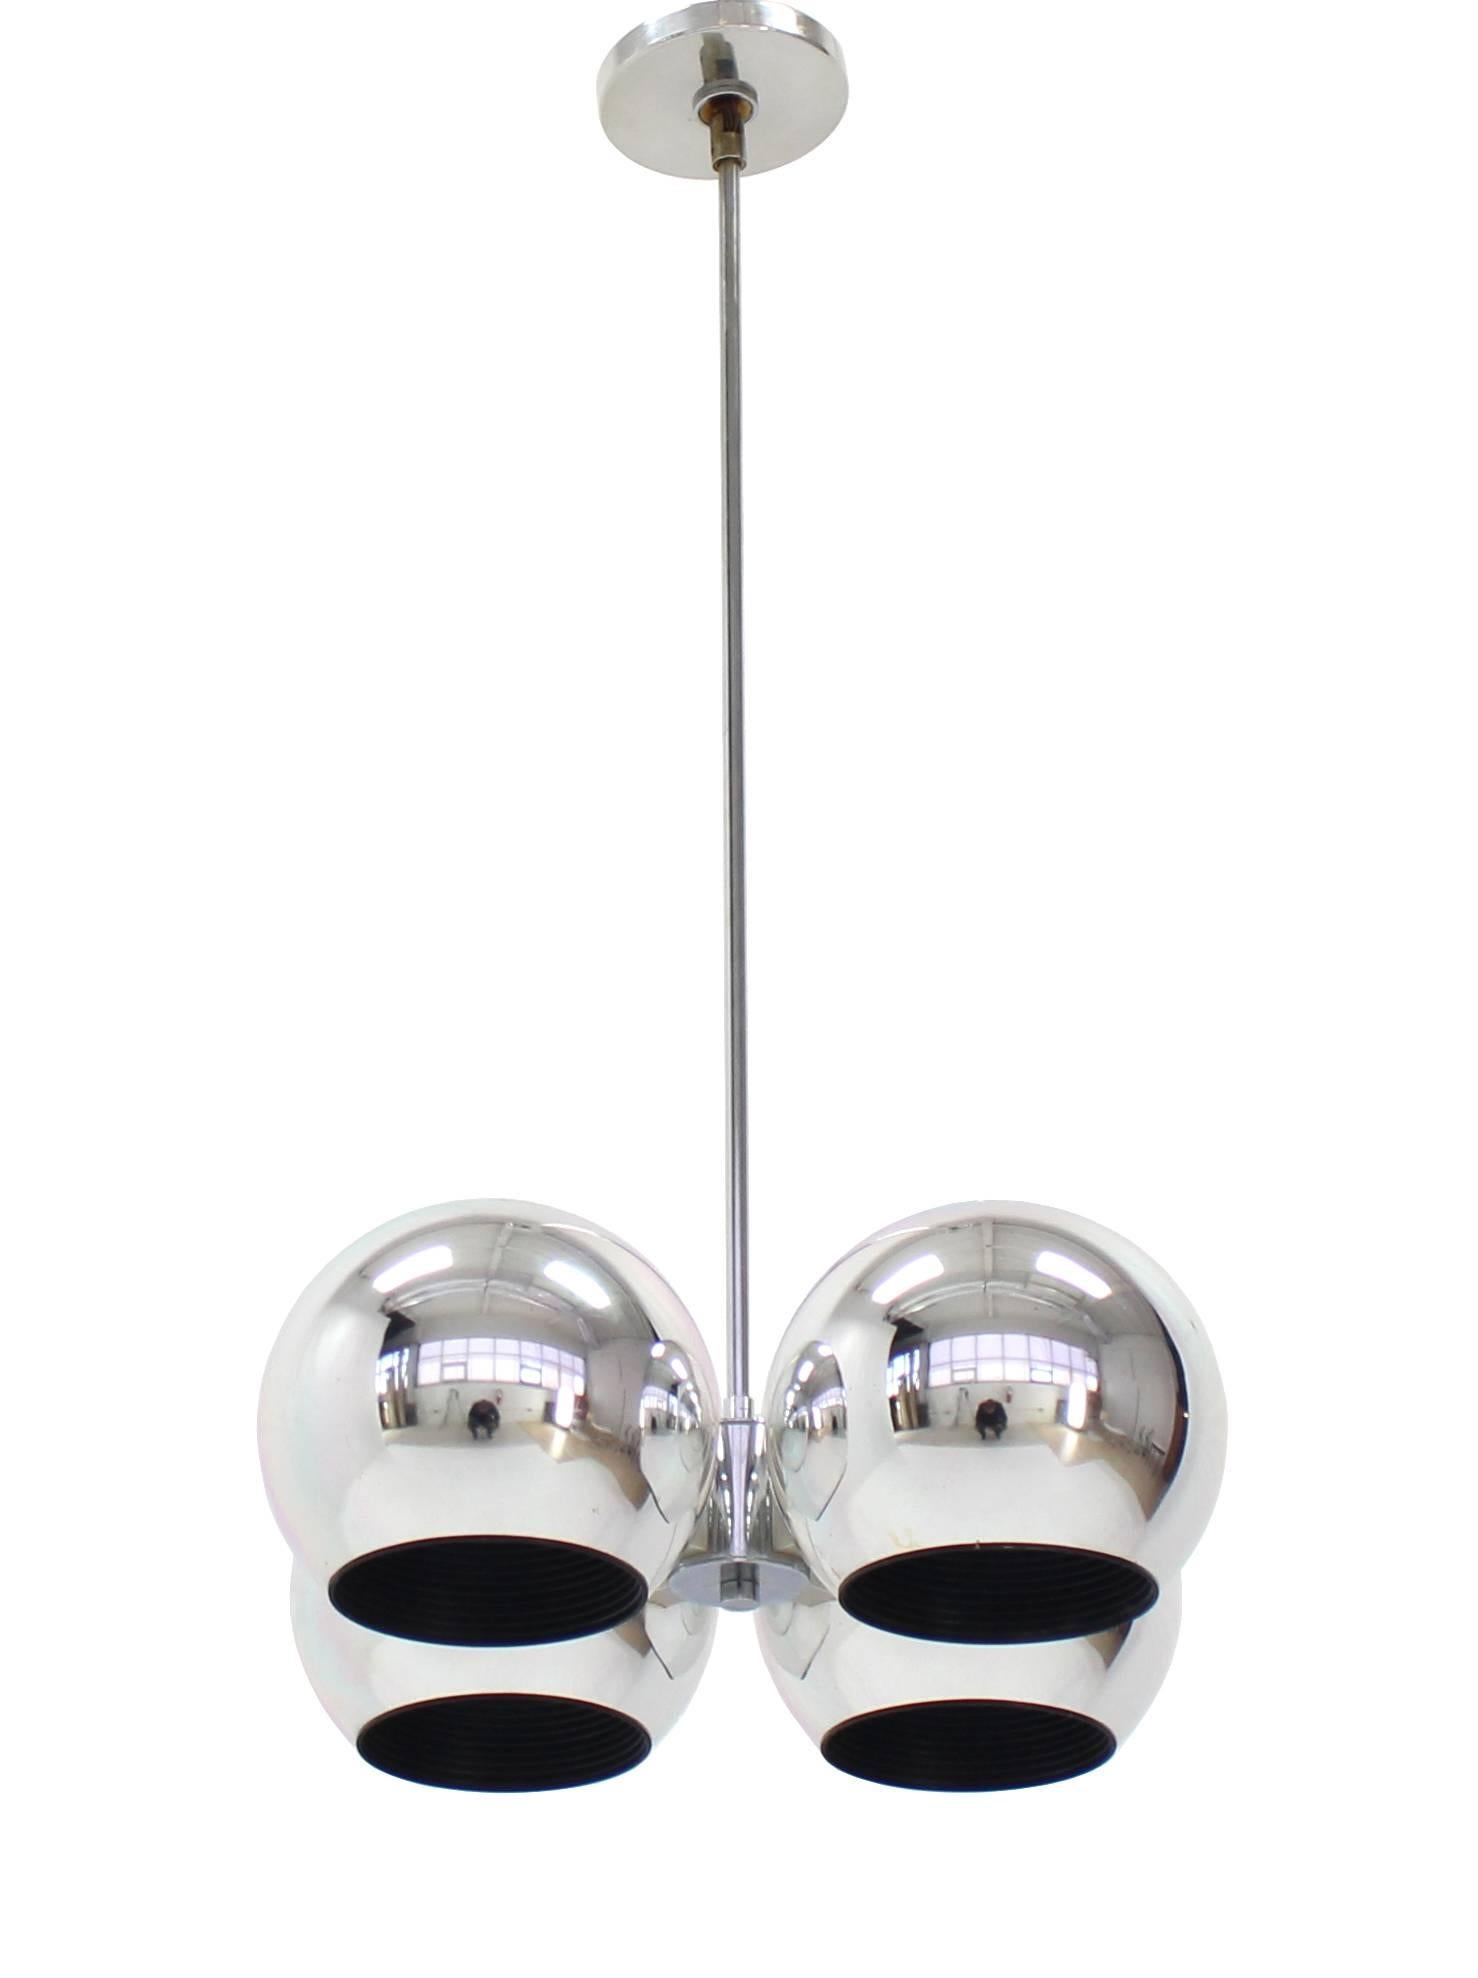 American Mid-Century Modern Four Globe Light Fixture Pendant For Sale